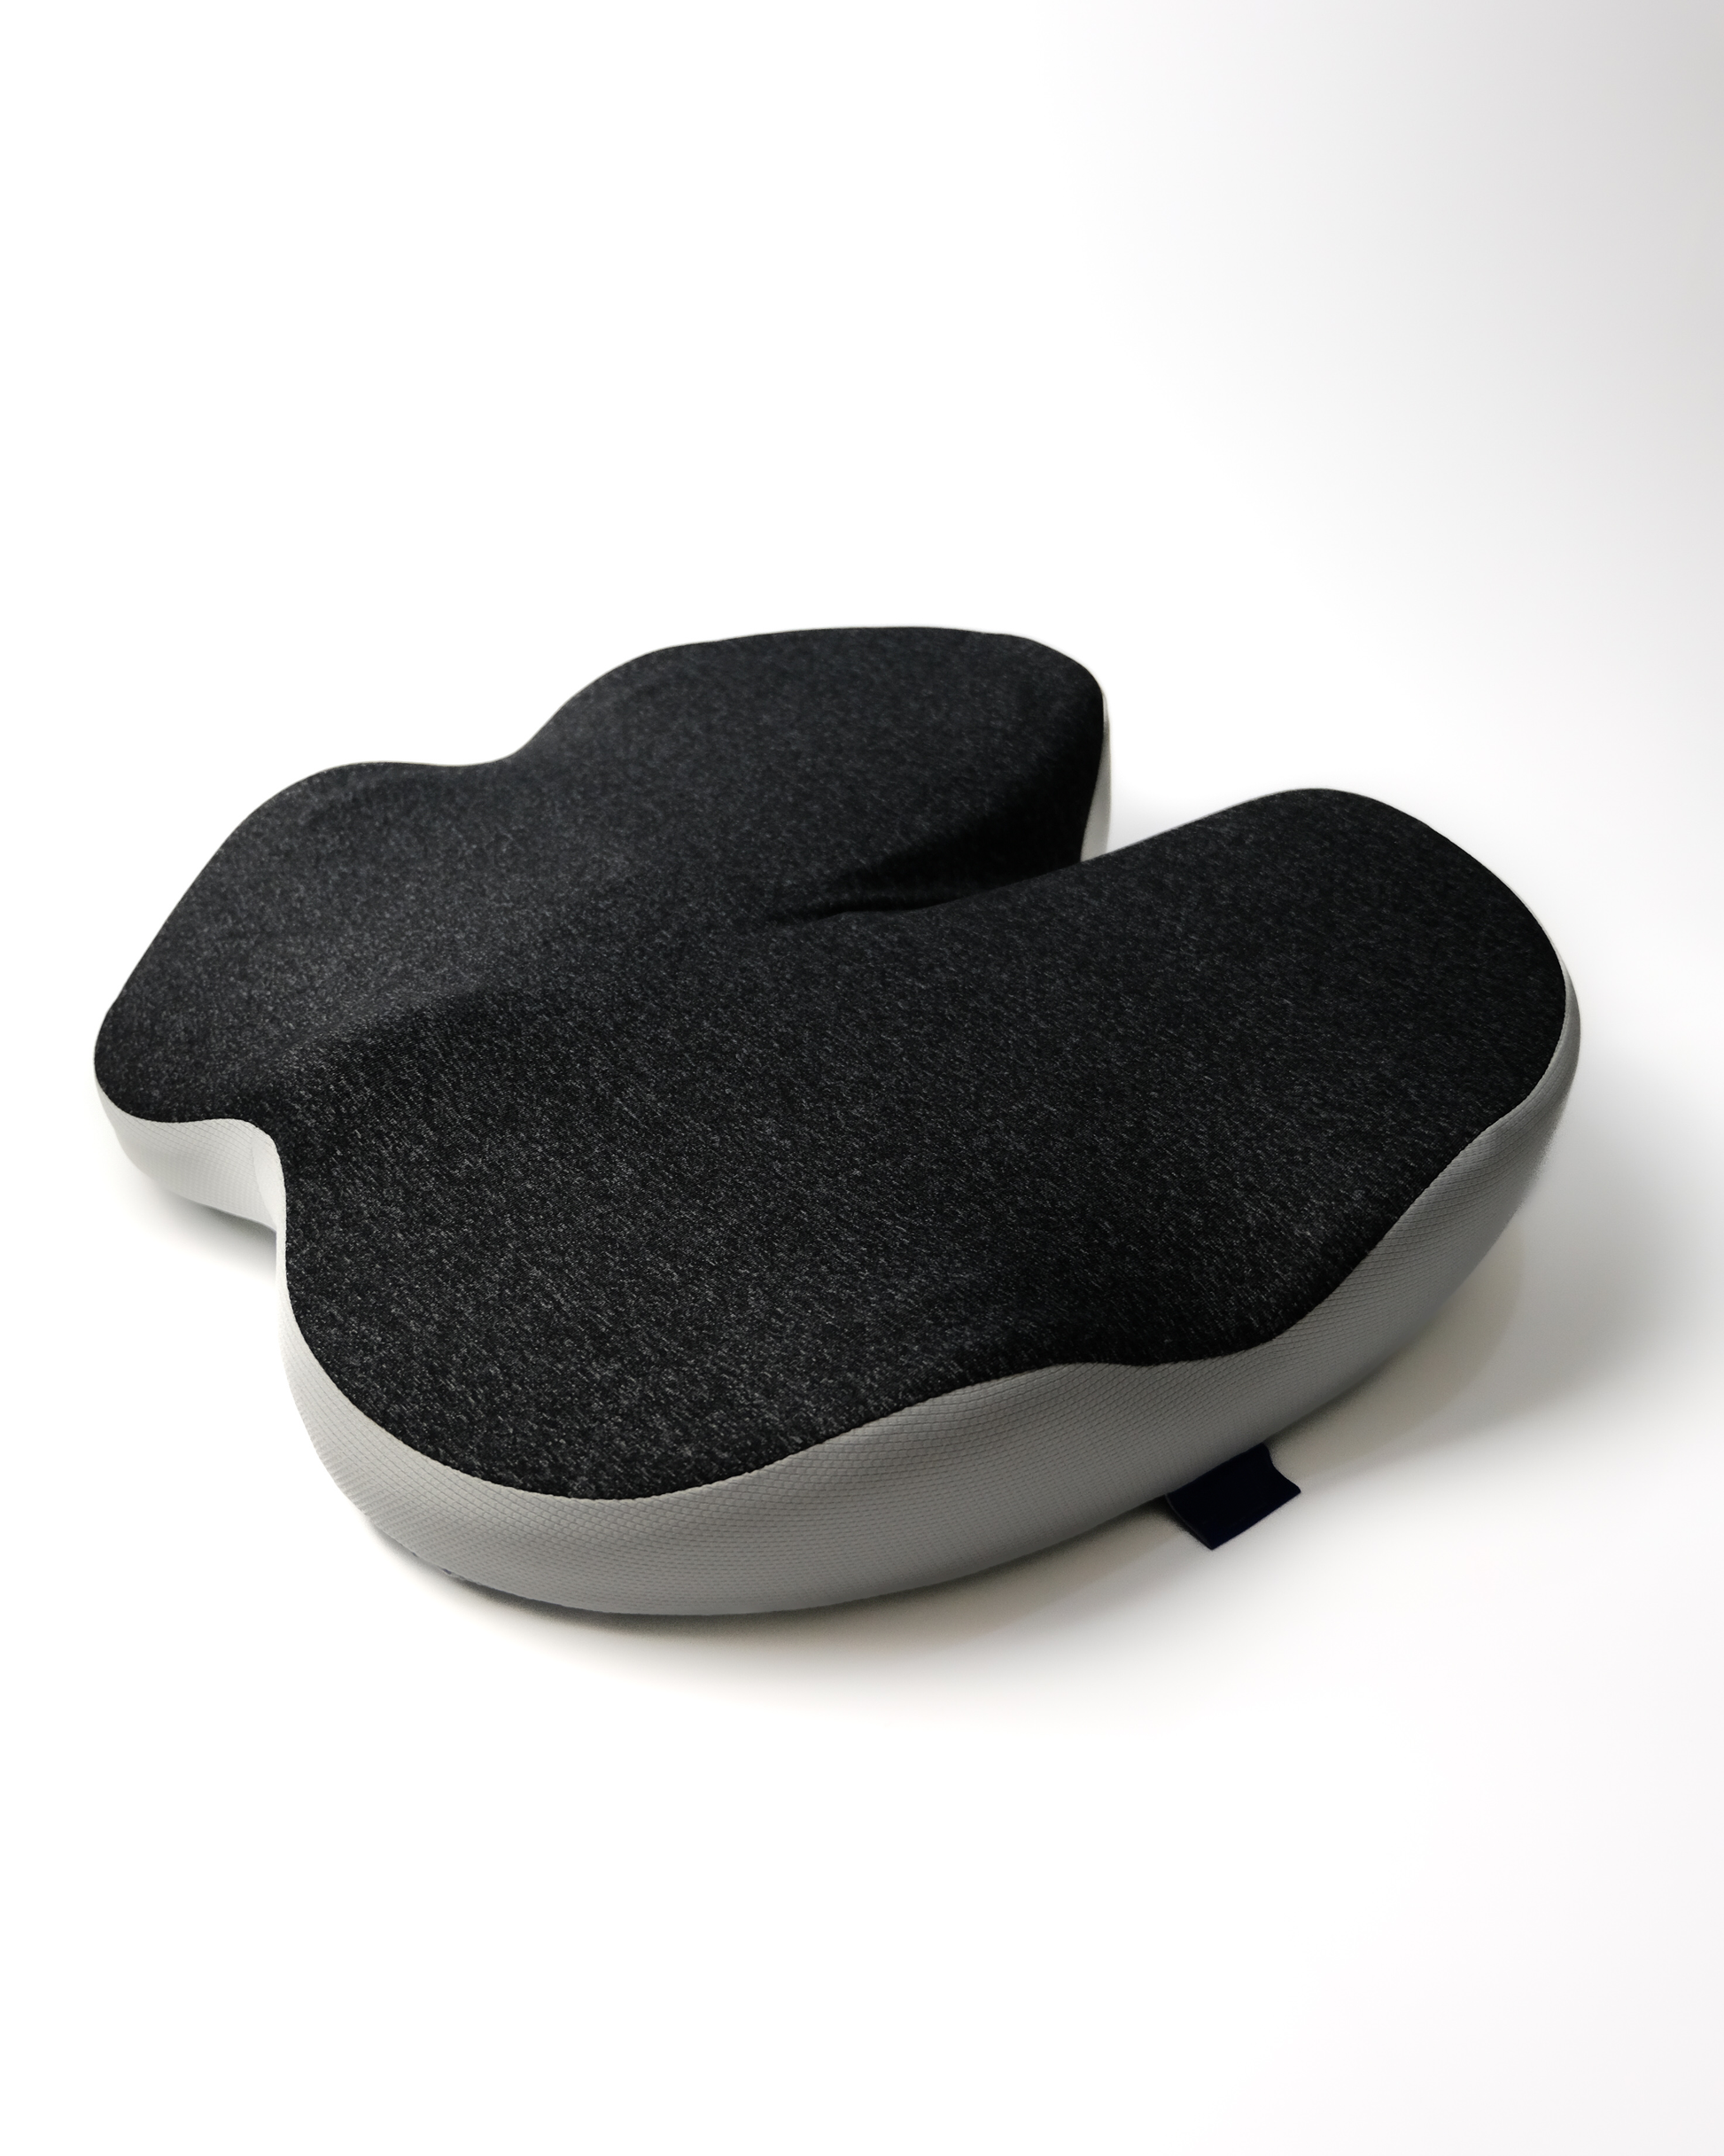 Cushion Lab Ergonomic Pressure Relief Seat Cushion - Black